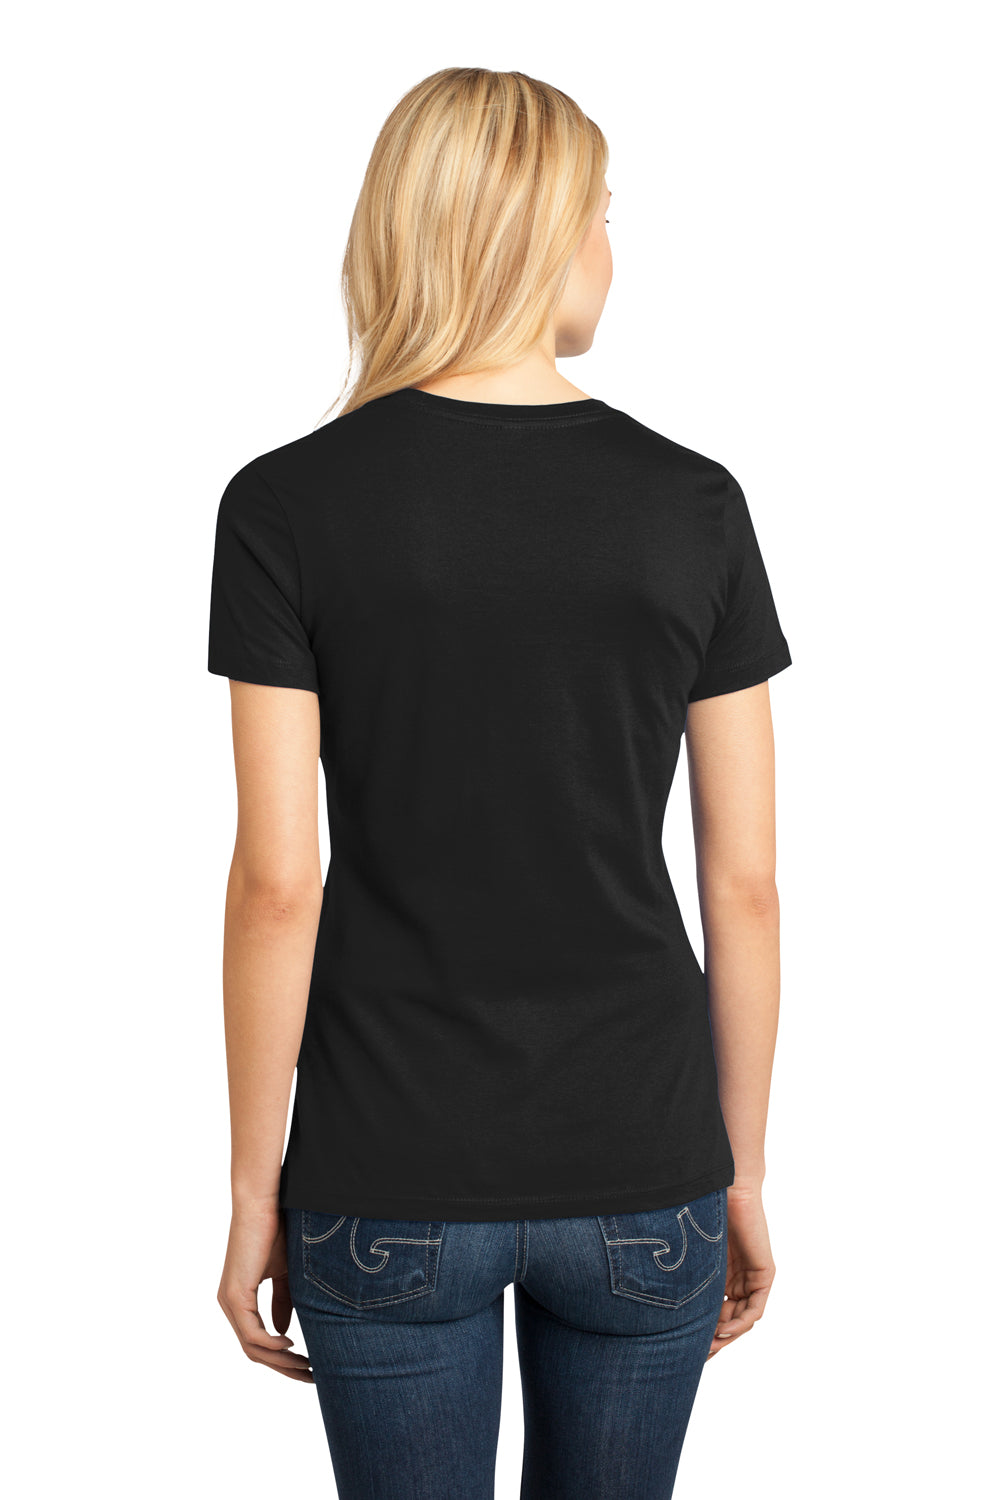 District DM104L Womens Perfect Weight Short Sleeve Crewneck T-Shirt Black Back